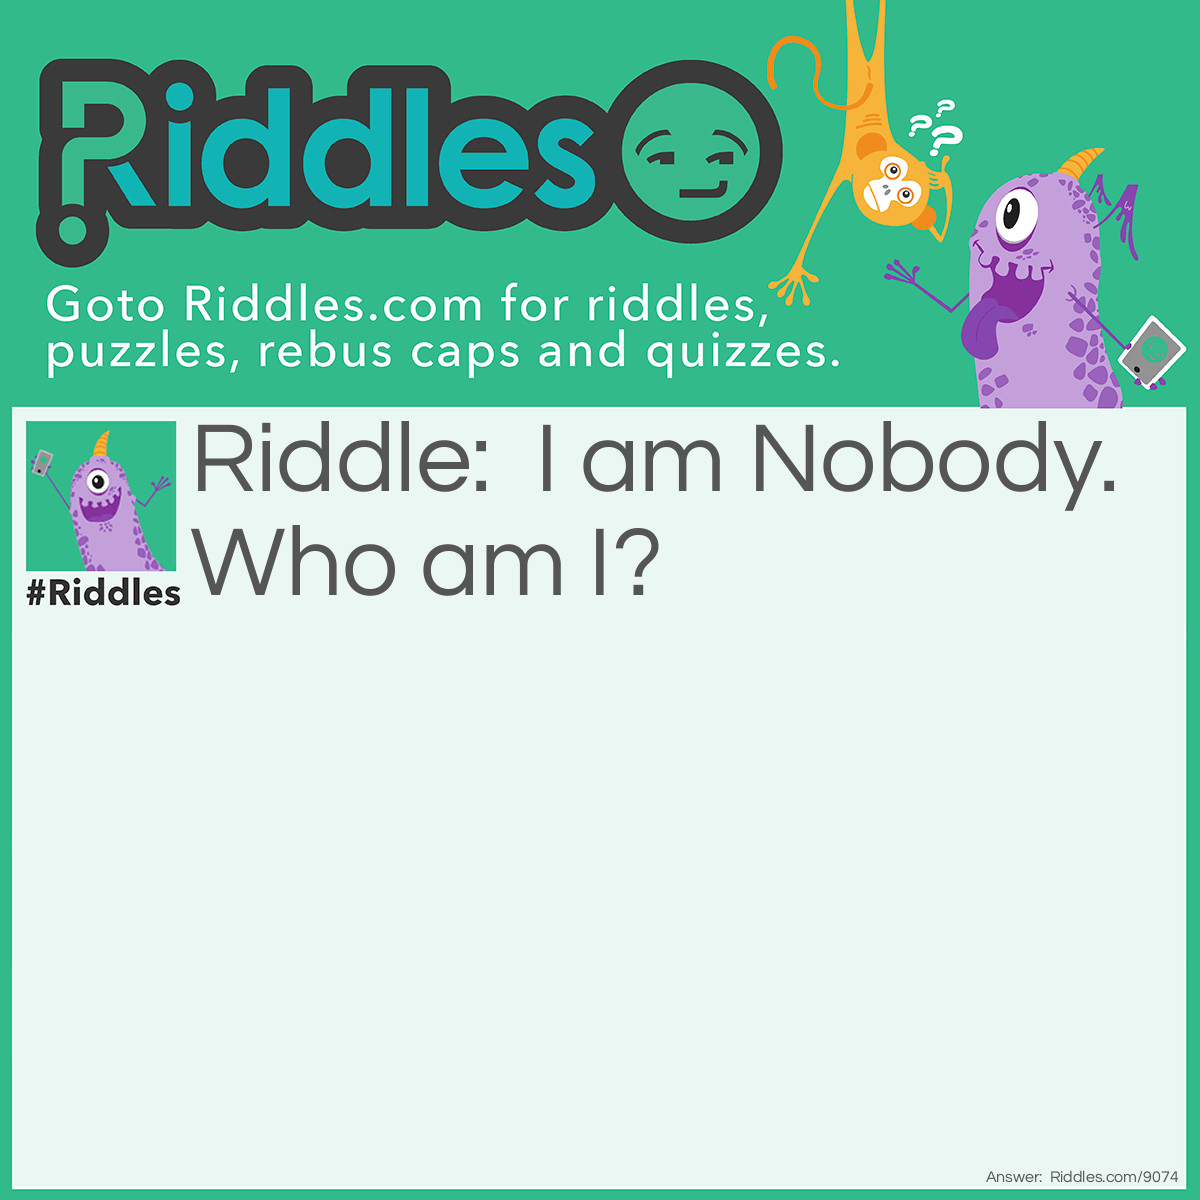 Riddle: I am Nobody. Who am I? Answer: Odysseus